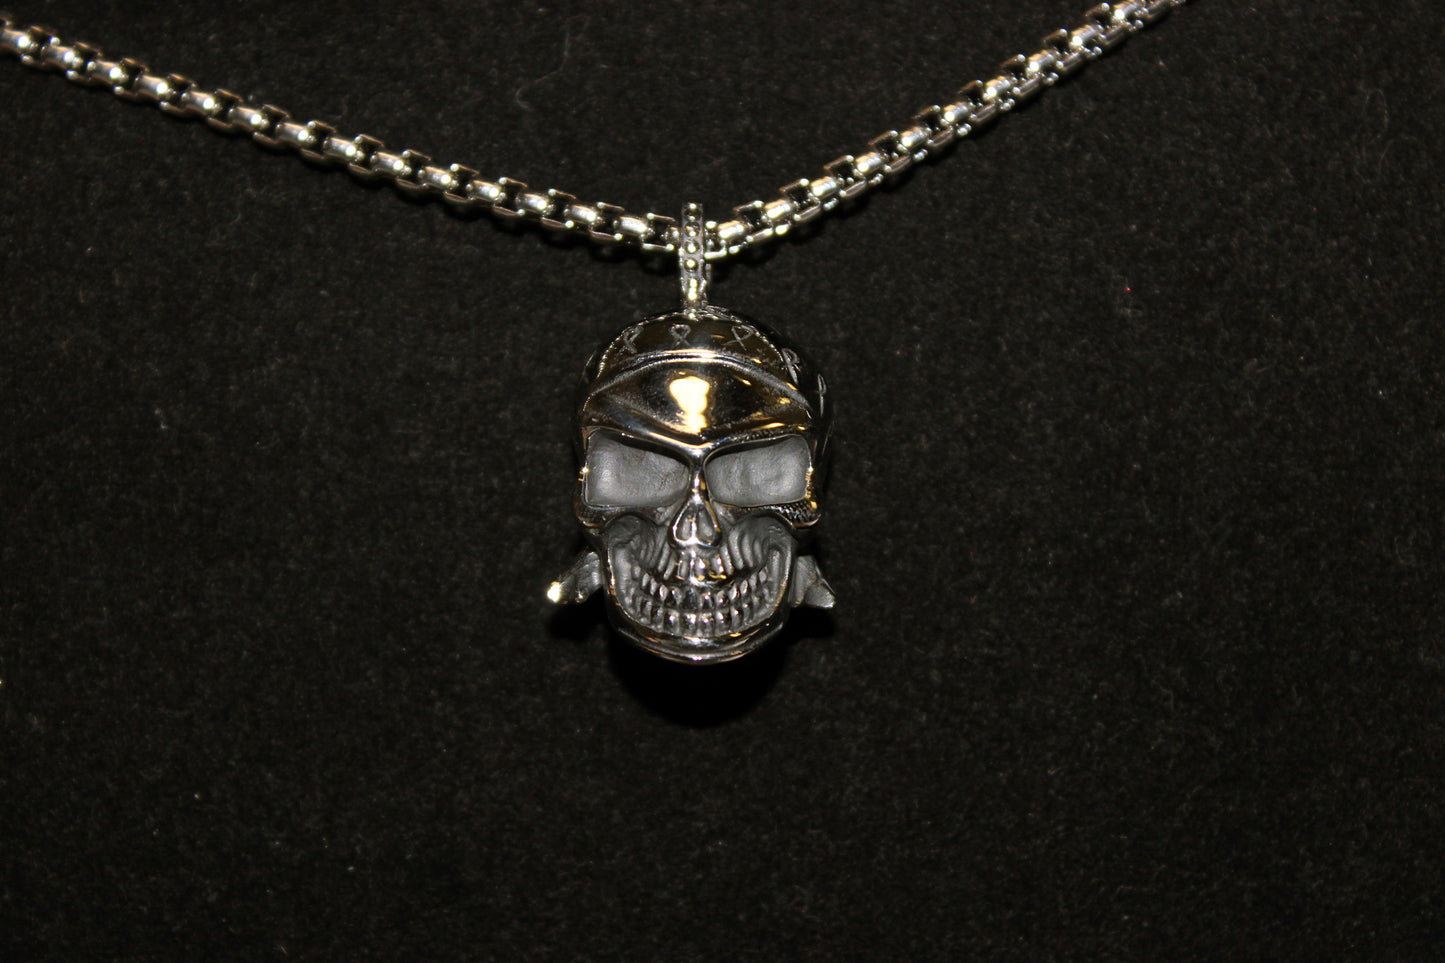 Stainless Steel Small Skull Pendant with Ribbons on Helmet- UDINC0491